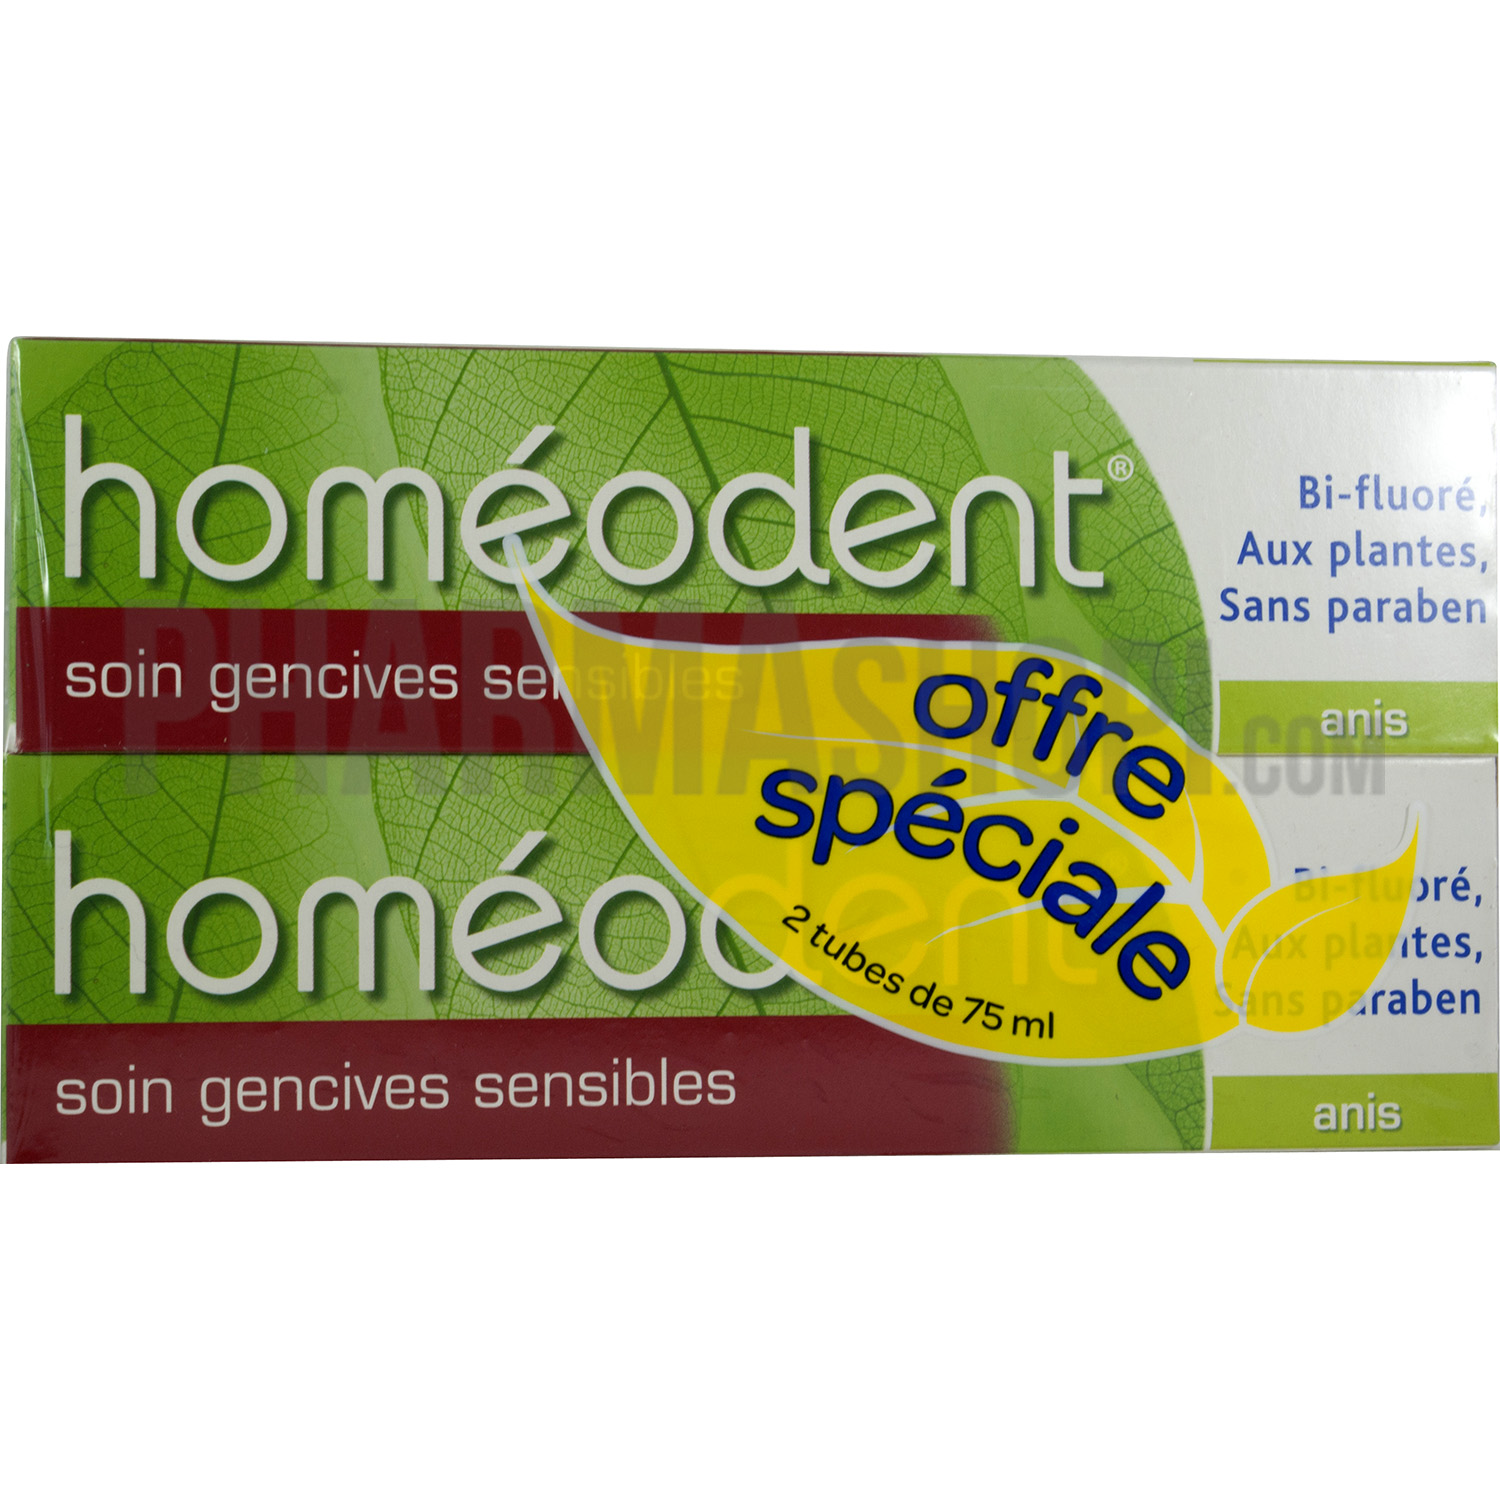 Homéodent soin gencives sensibles goût anis Boiron - 2 tubes de 75 ml